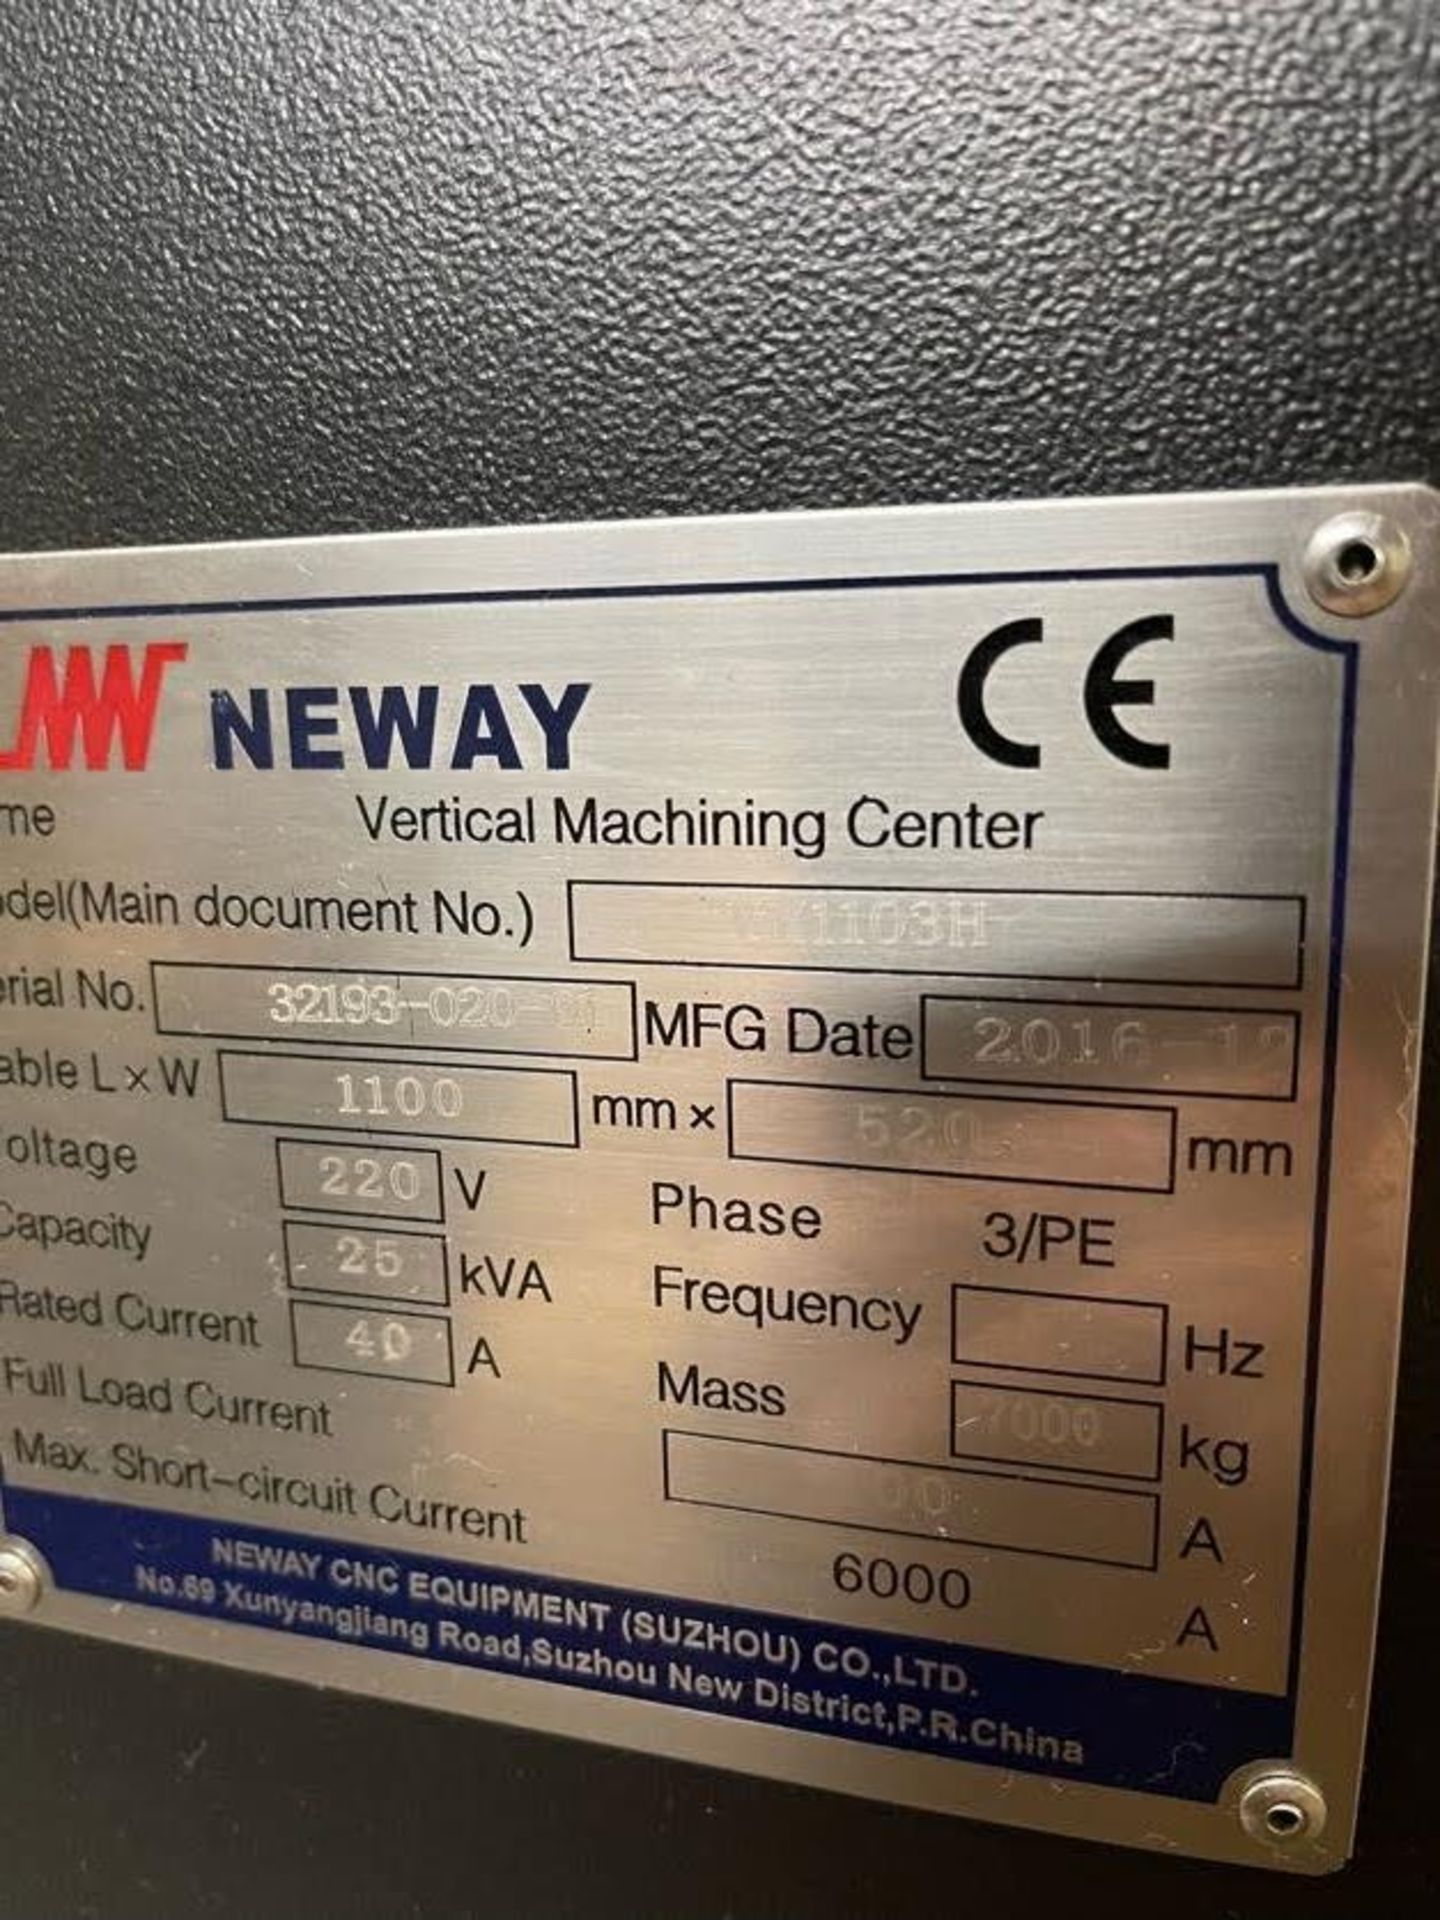 Neway VM-1103H CNC Vertical Machining Center, S/N 32193-020-01, 2016 - Image 11 of 24